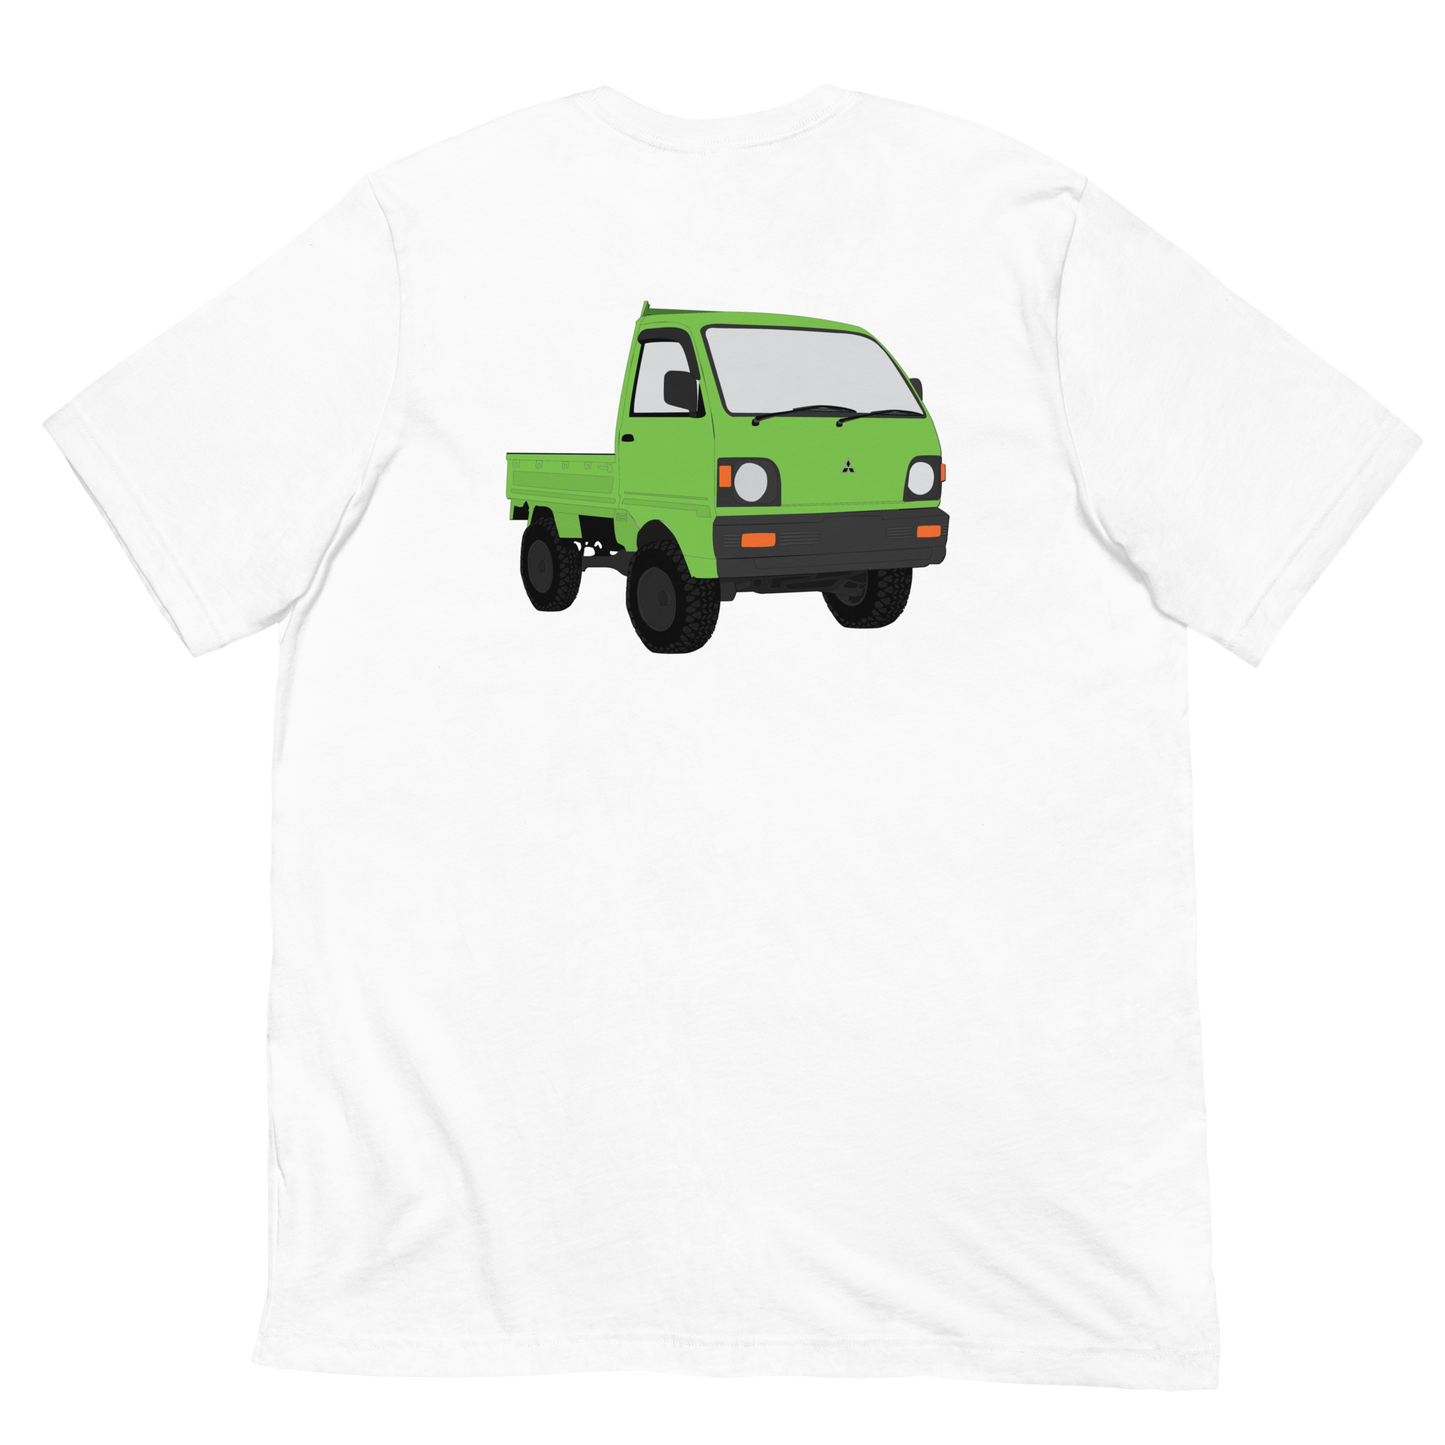 Kei truck Short Sleeve Tee Shirt